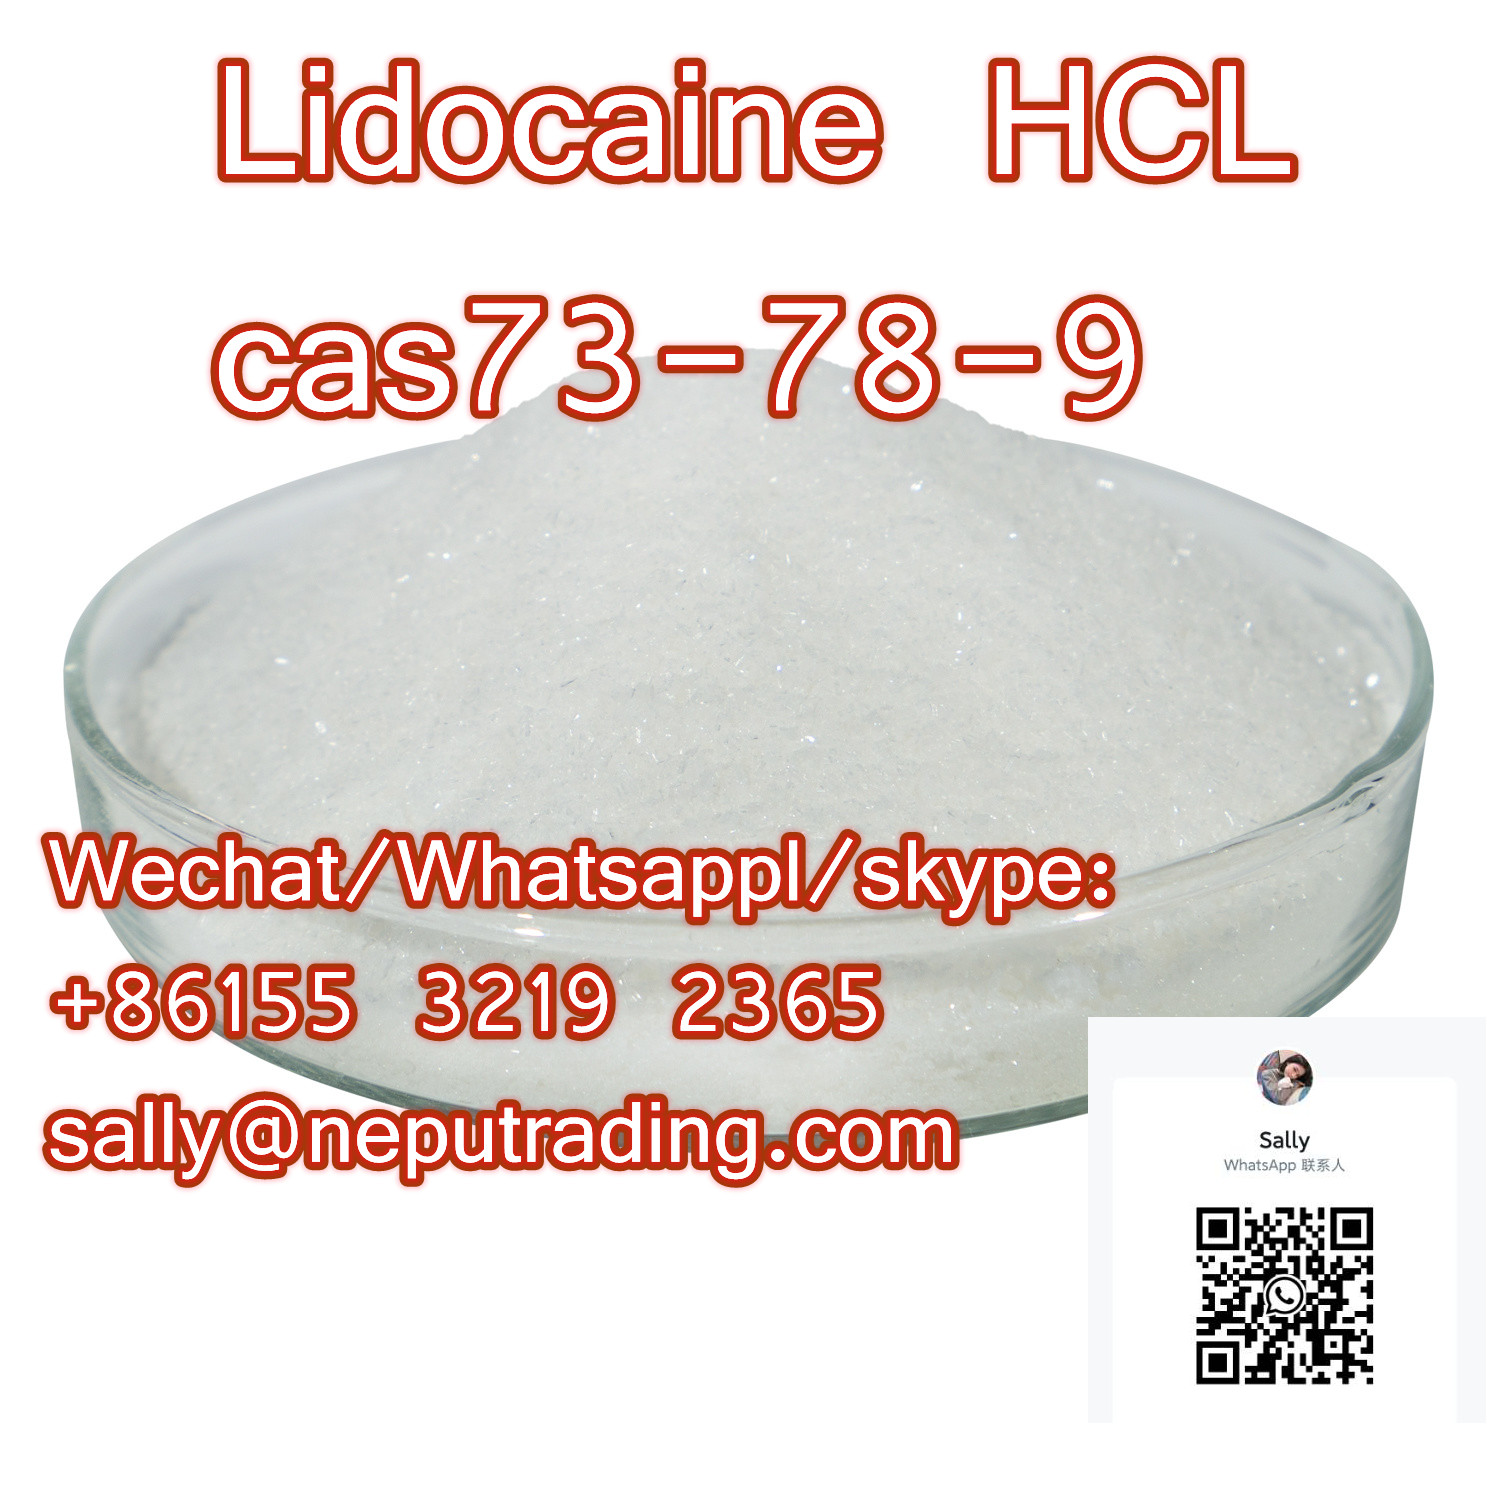 China Manufacture Supply Top USP/GMP/Bp CAS 73-78-9 Lidocaine hcl